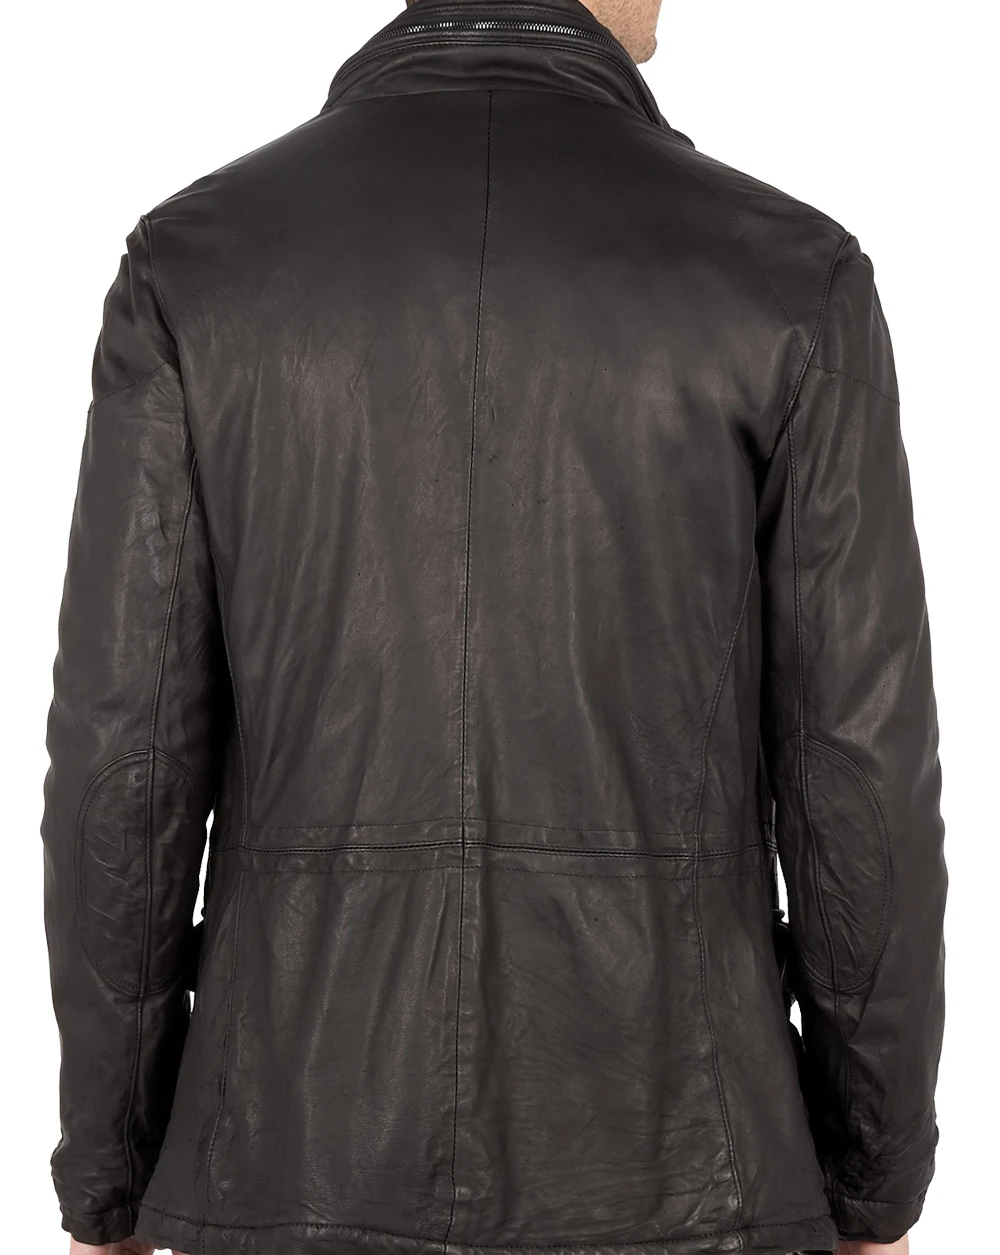 Los Angeles Washed Leather Jacket